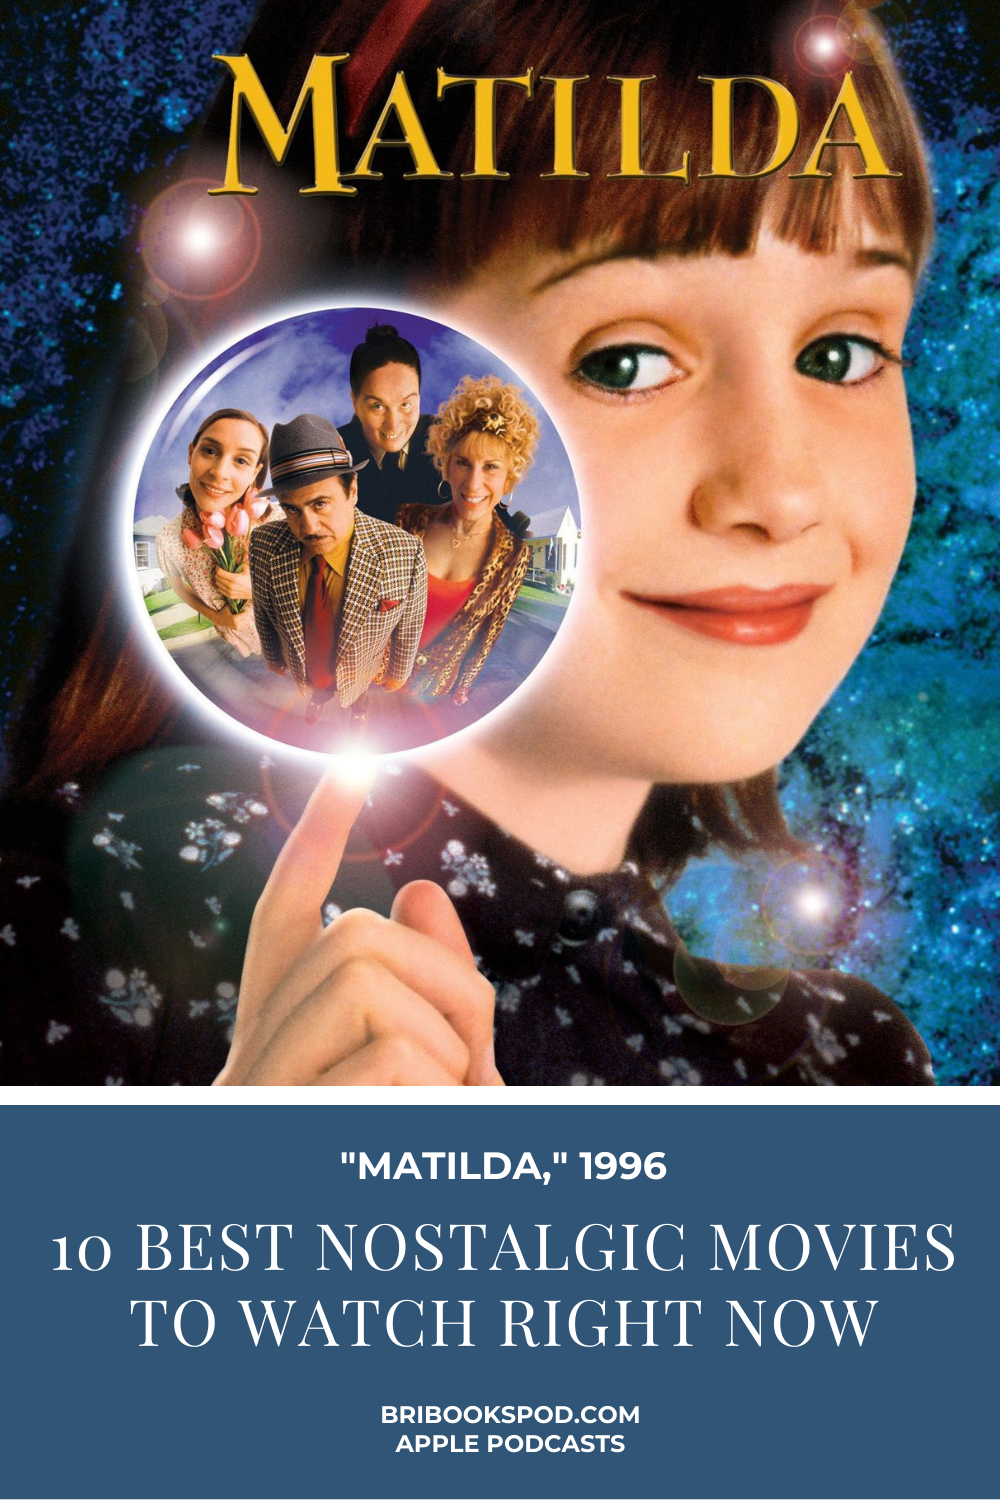 10 Best Nostalgic Movies to Watch Right Now: Matilda